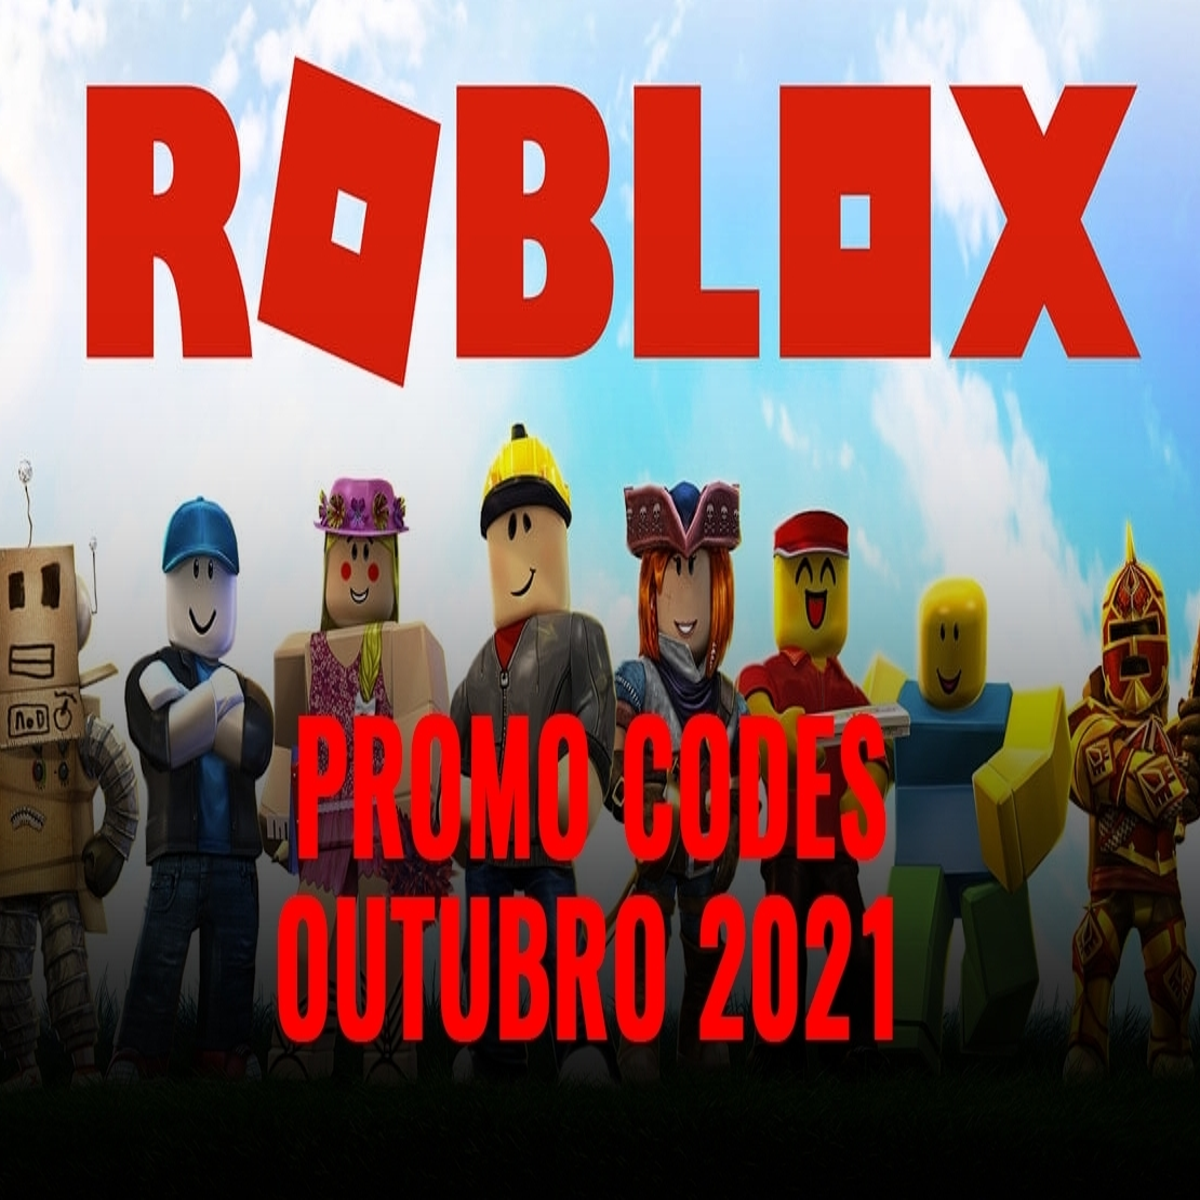 Roblox codigos (2021) - Melhores codes para varios modos de jogo